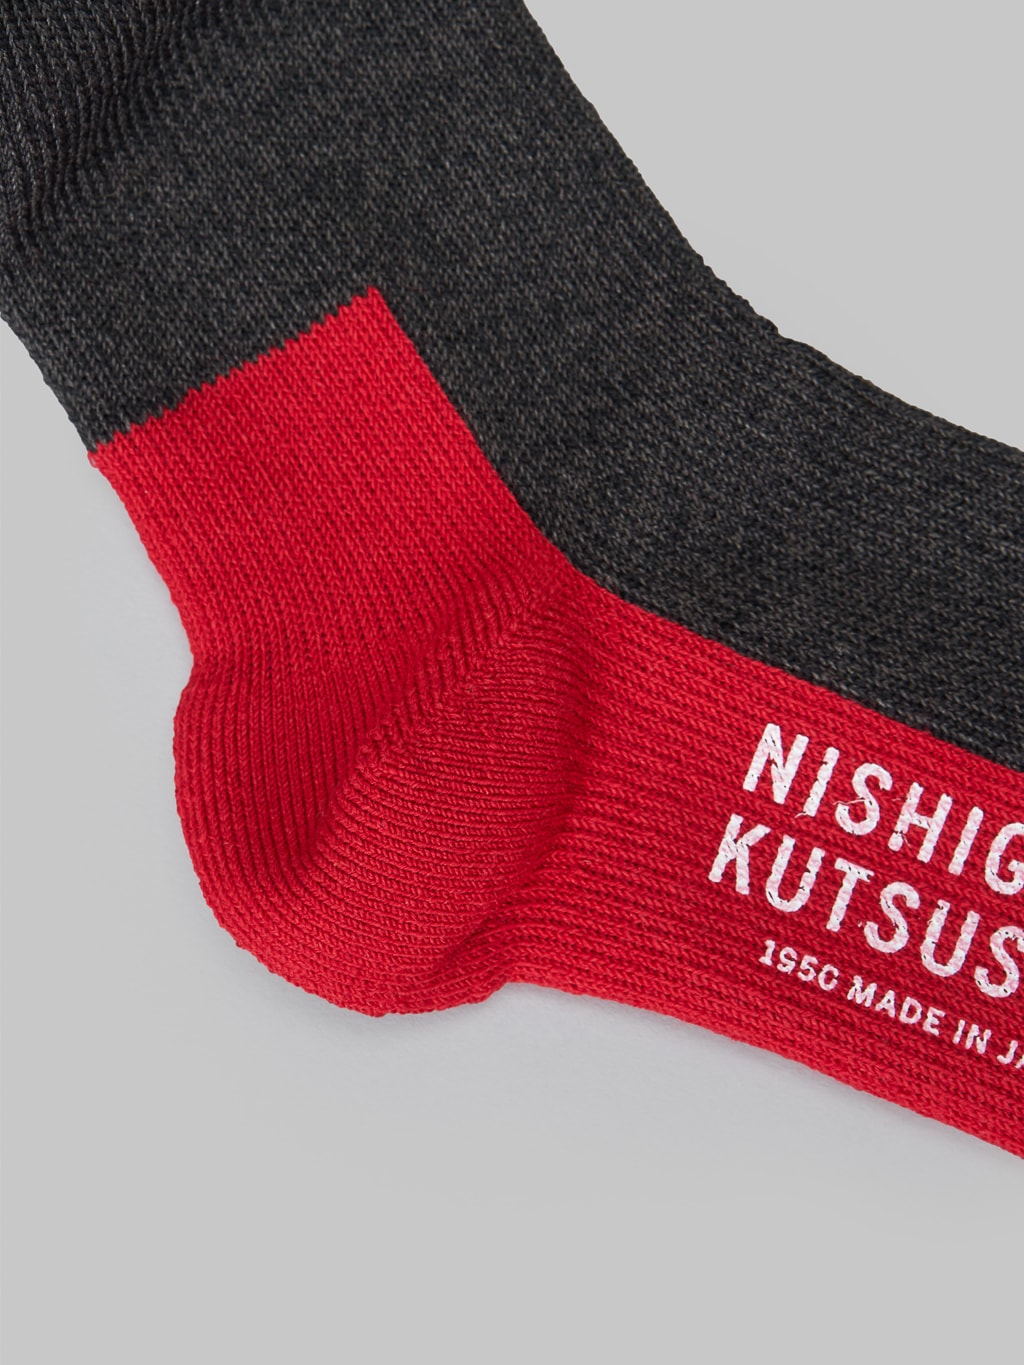 Nishiguchi Kutsushita Wool Pile Walk Socks Charcoal reinforced heel